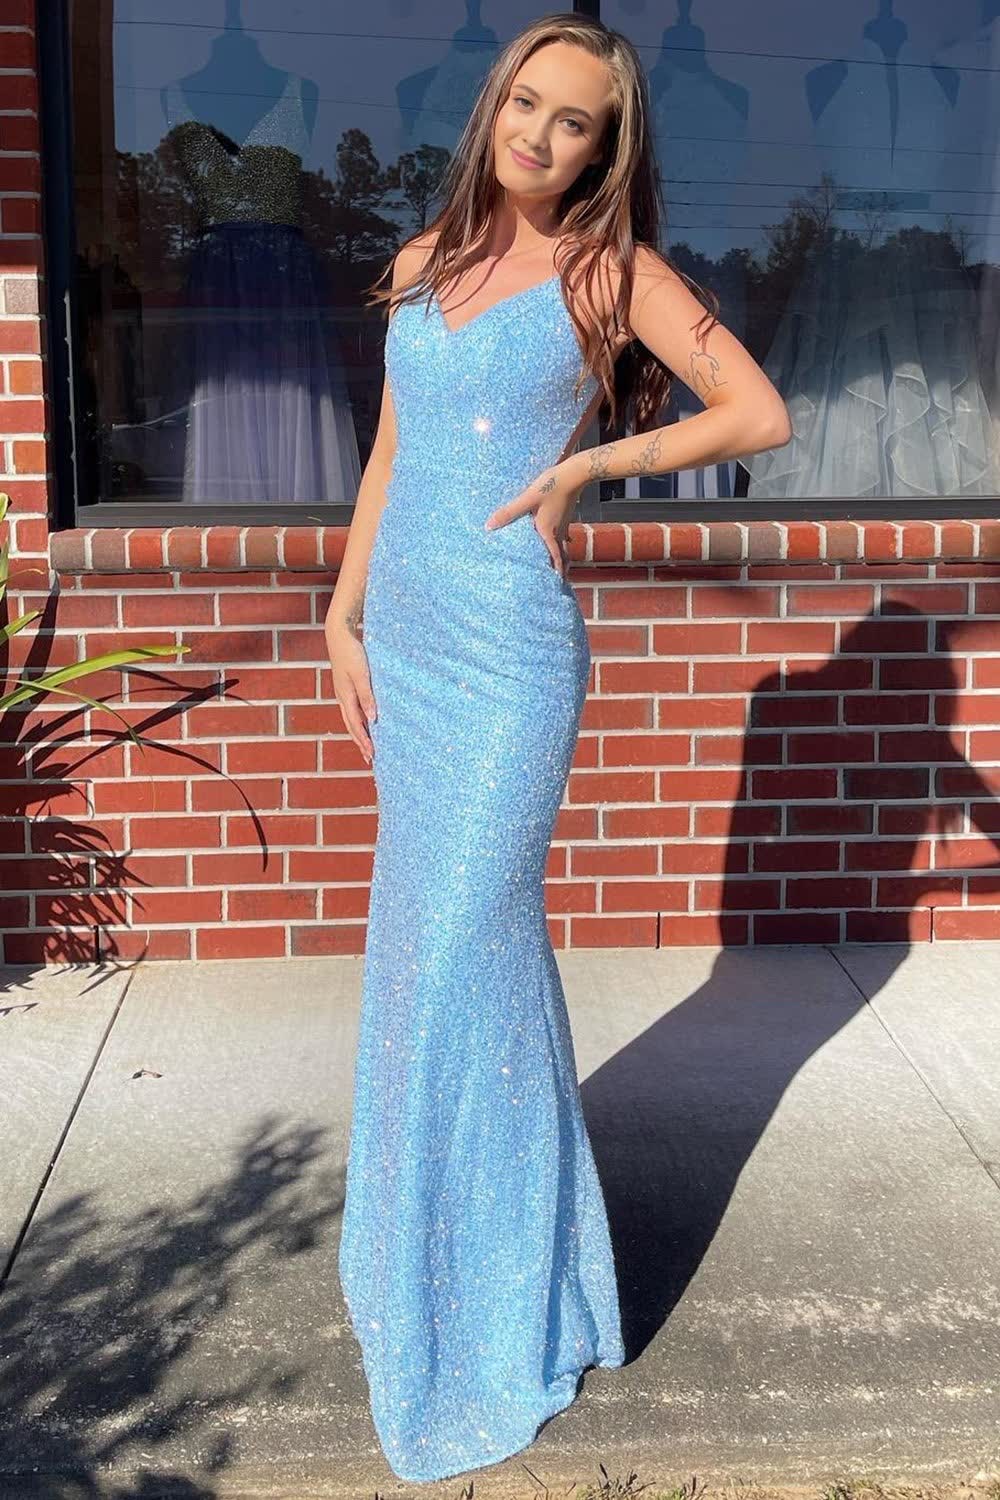 Light Blue Sequins Backless Mermaid Corset Prom Dress outfits, Light Blue Sequins Backless Mermaid Prom Dress